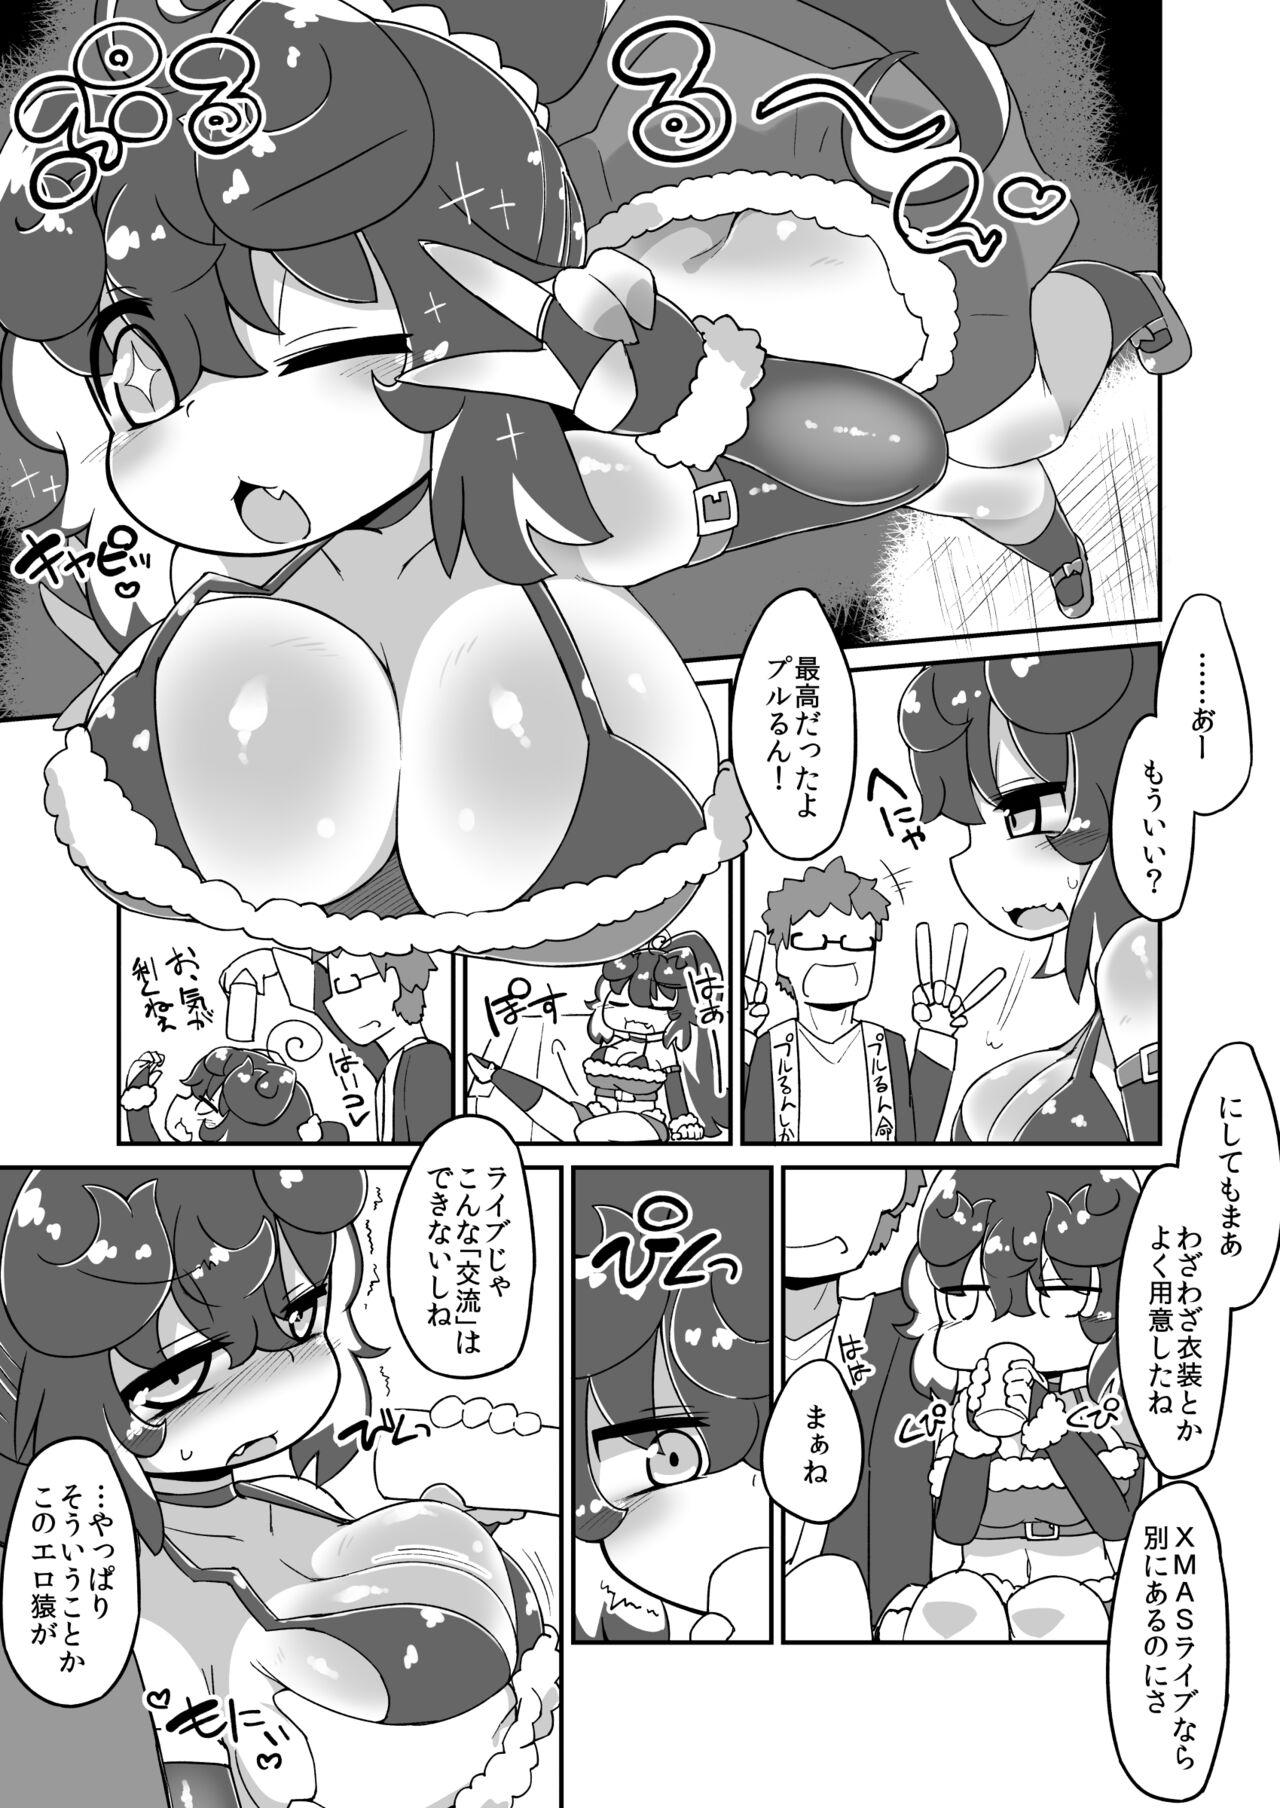 Amature Christmas Prune Ecchi Manga - Bomber girl 18yearsold - Picture 1